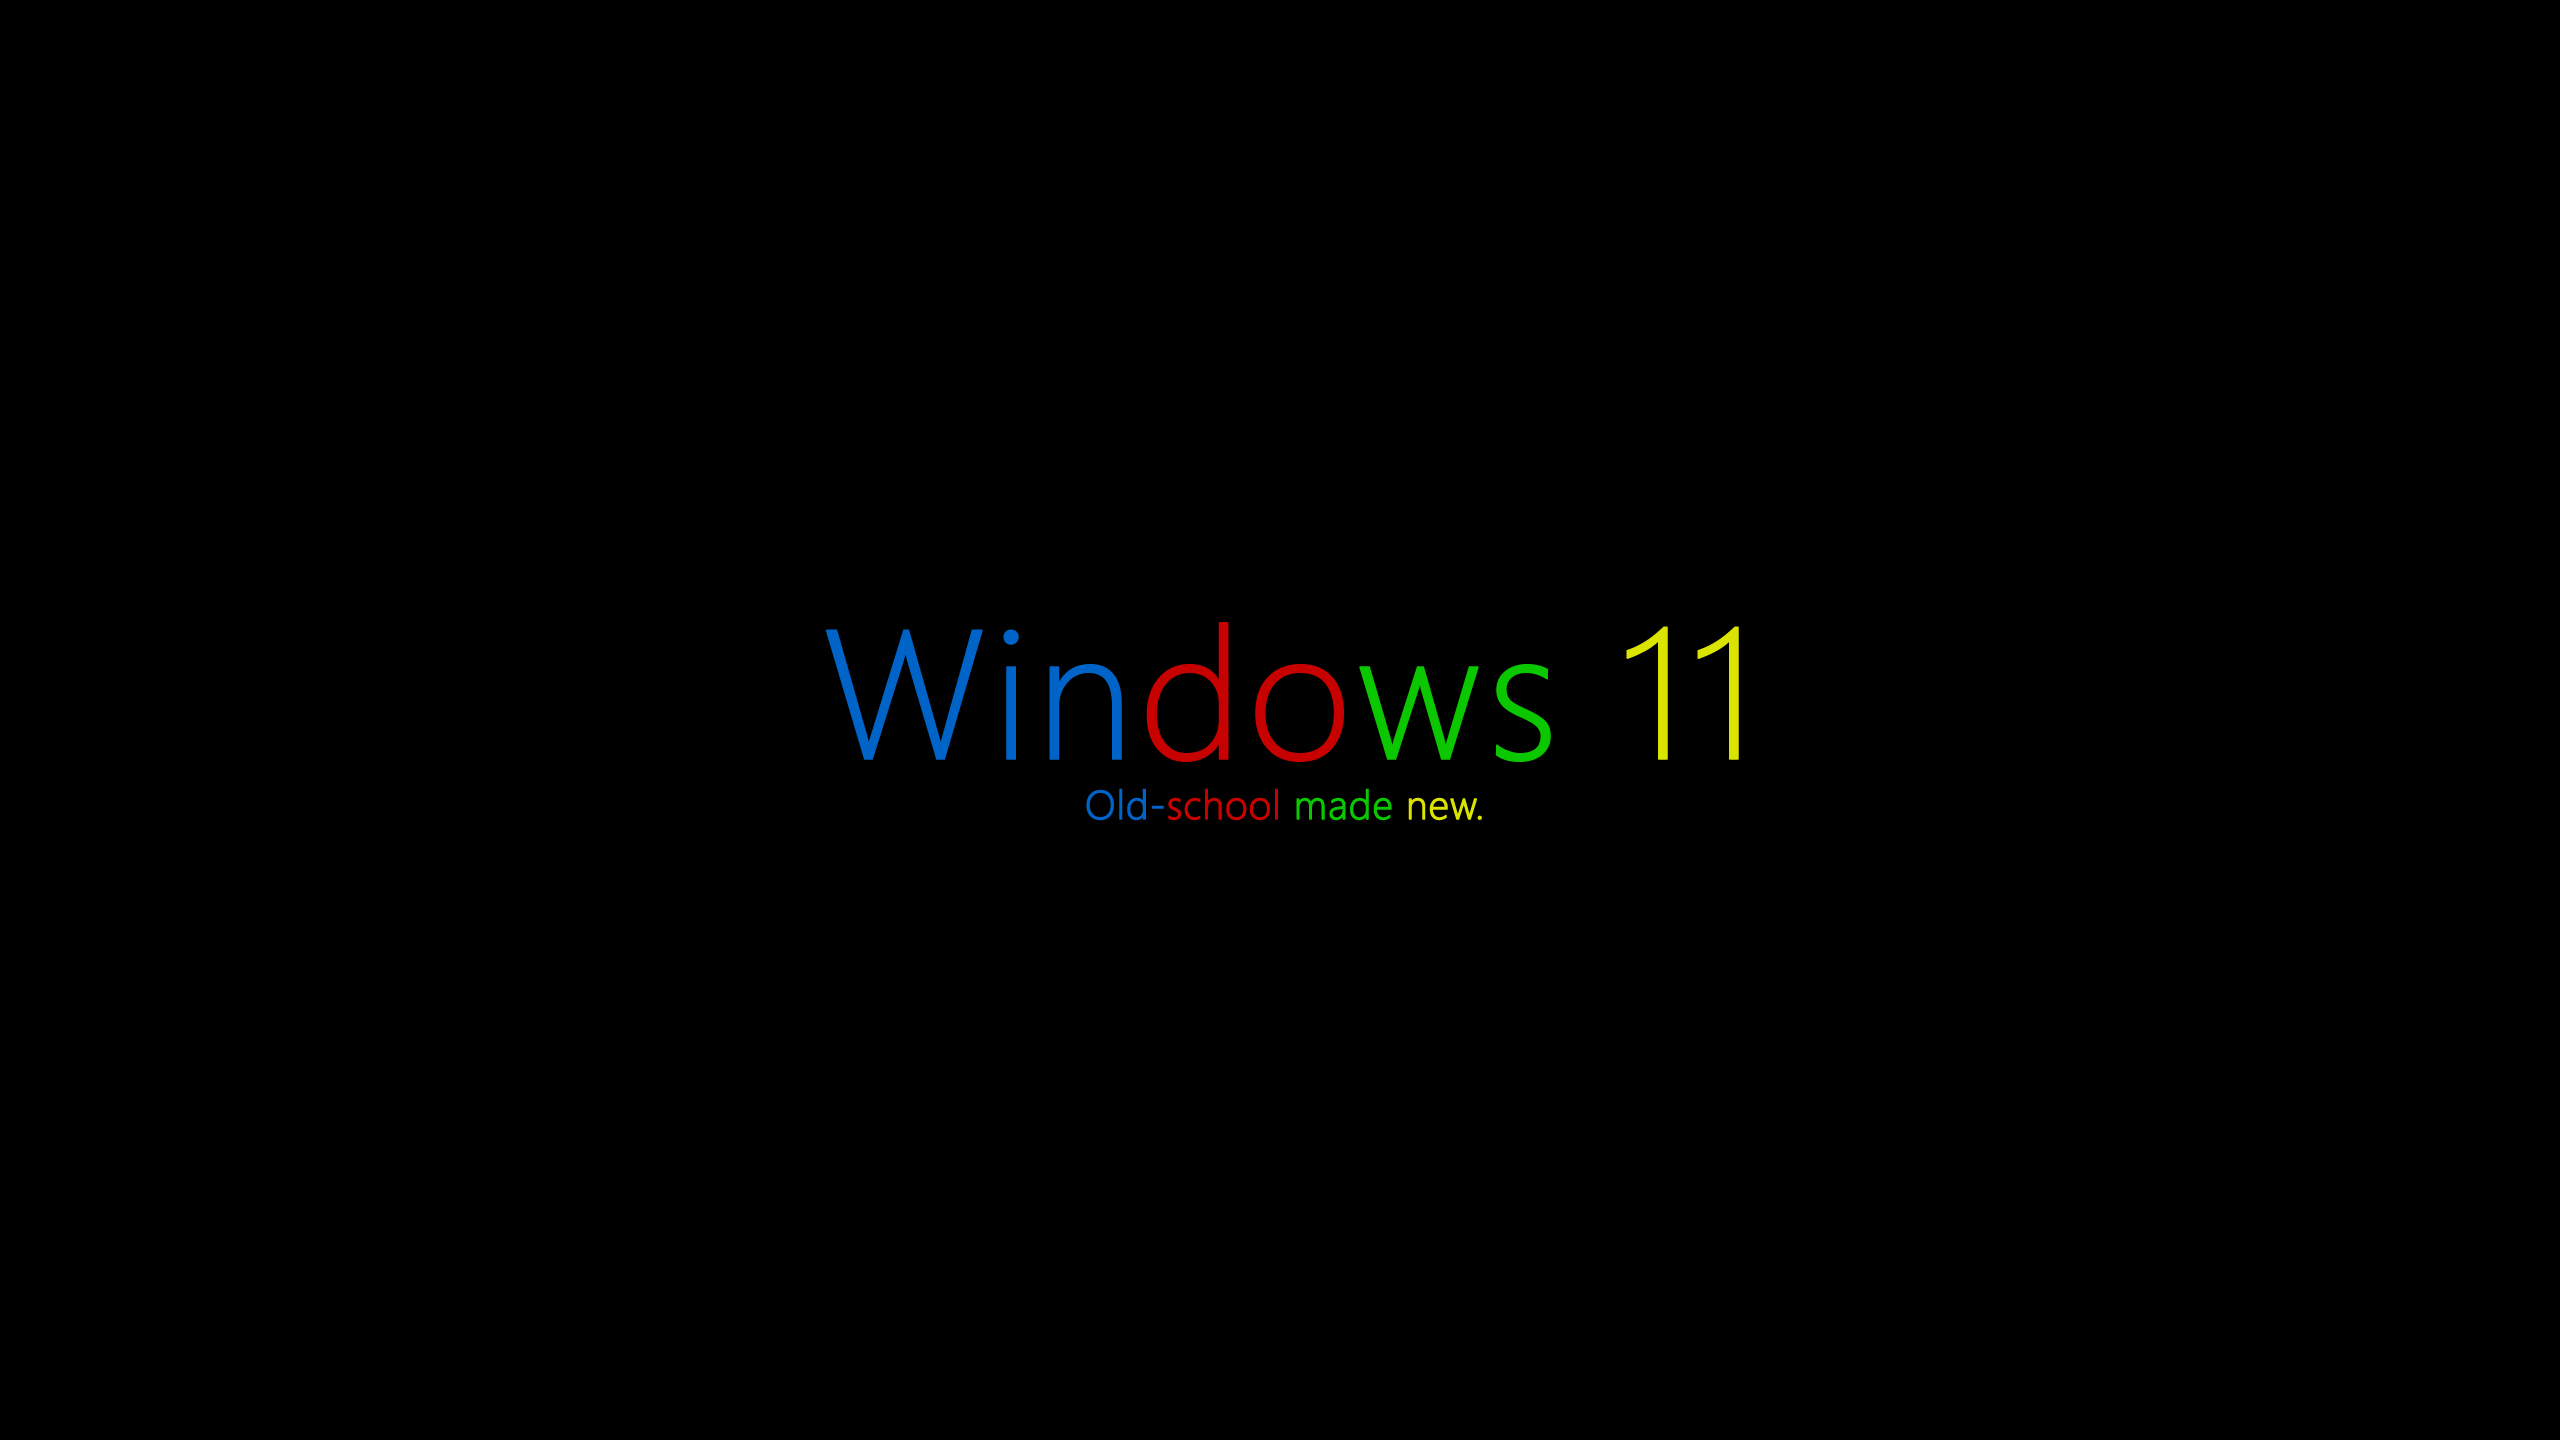 Windows 11 concept board image on Behance